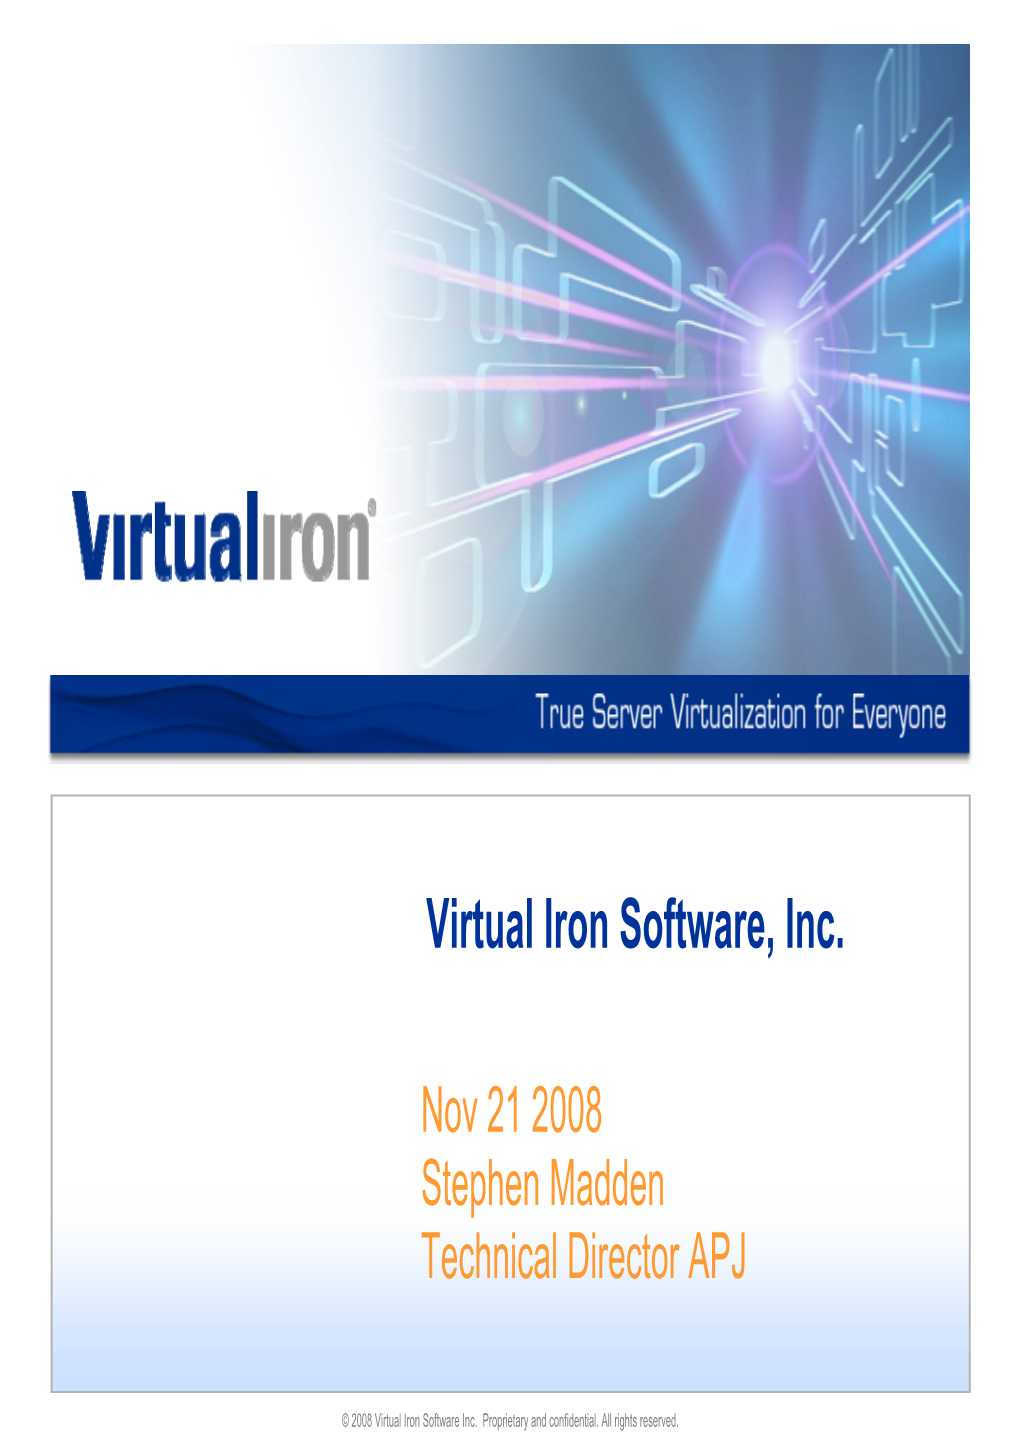 Virtual Iron Software, Inc